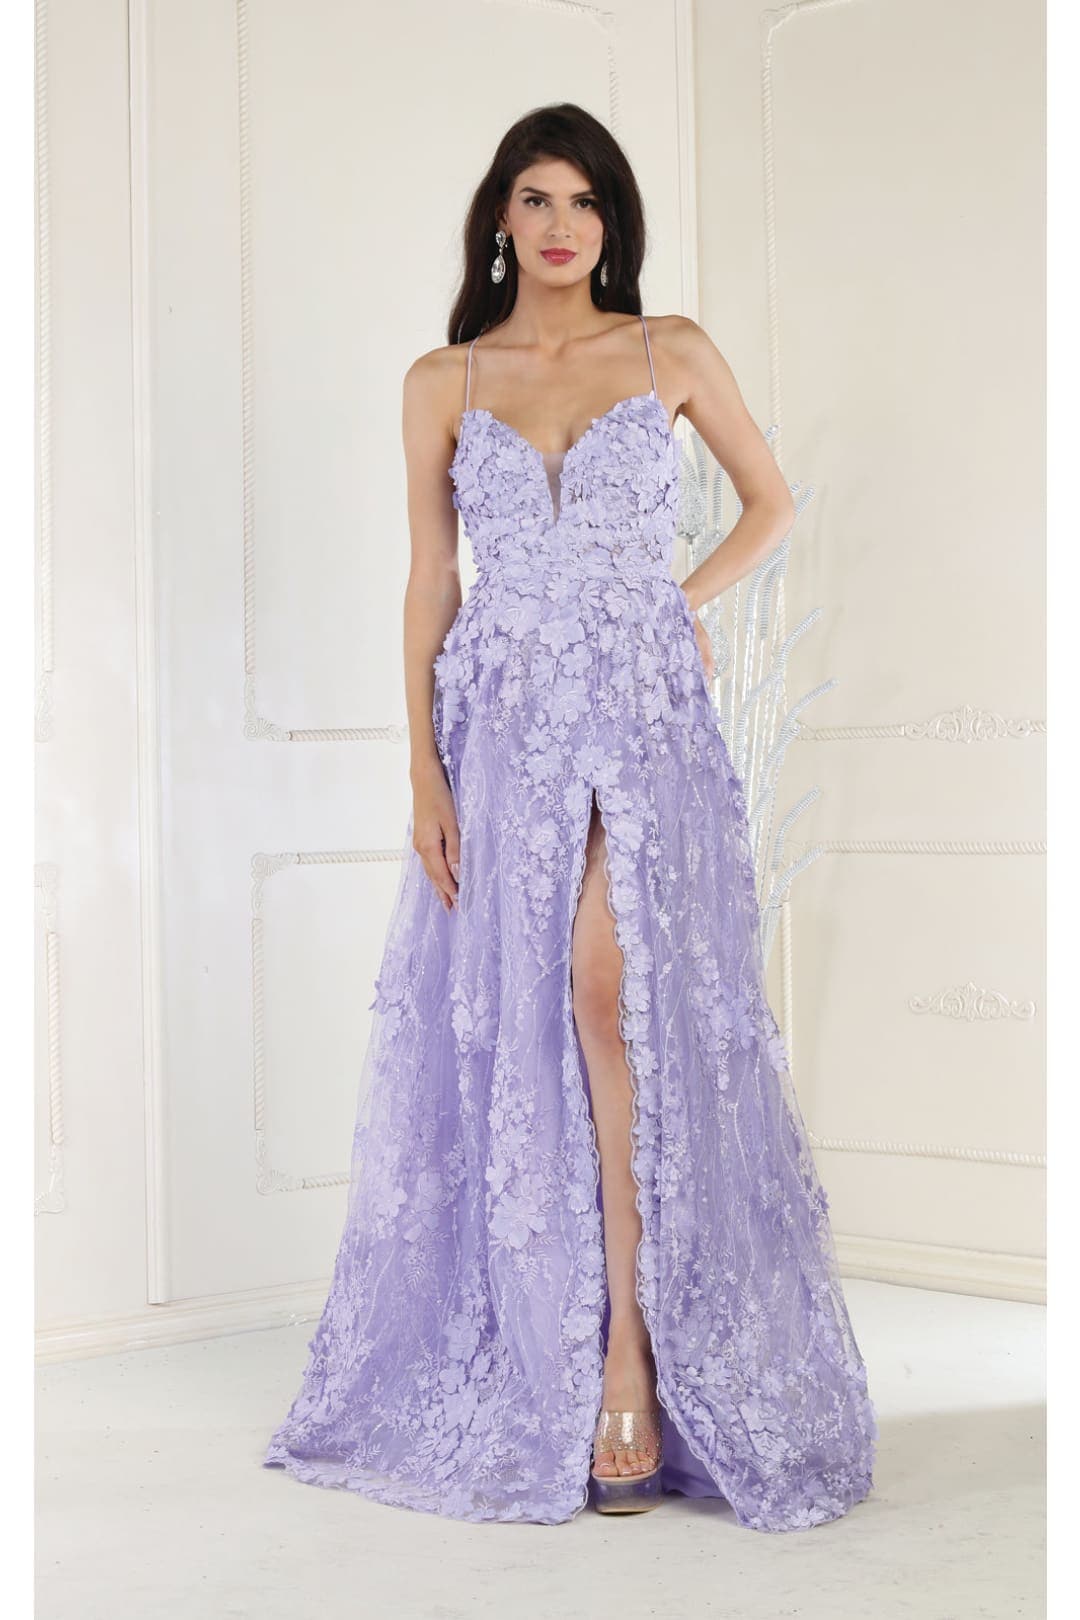 Thigh High Slit Prom Dress - LILAC / 2